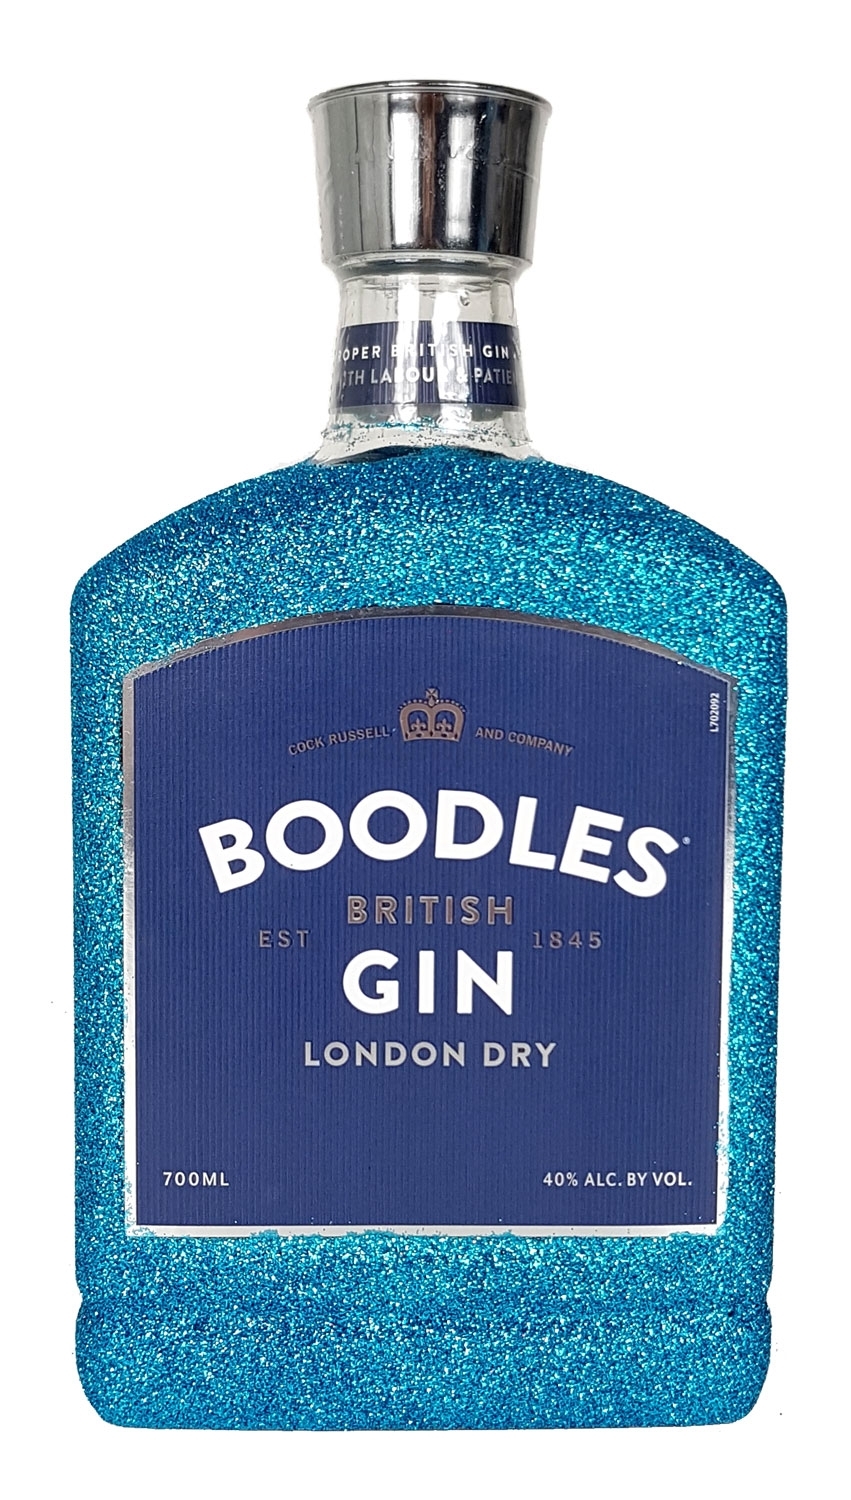 Boodles London Dry Gin 0,7l 700ml (40% Vol) Bling Bling Glitzerflasche Blau -[Enthält Sulfite]